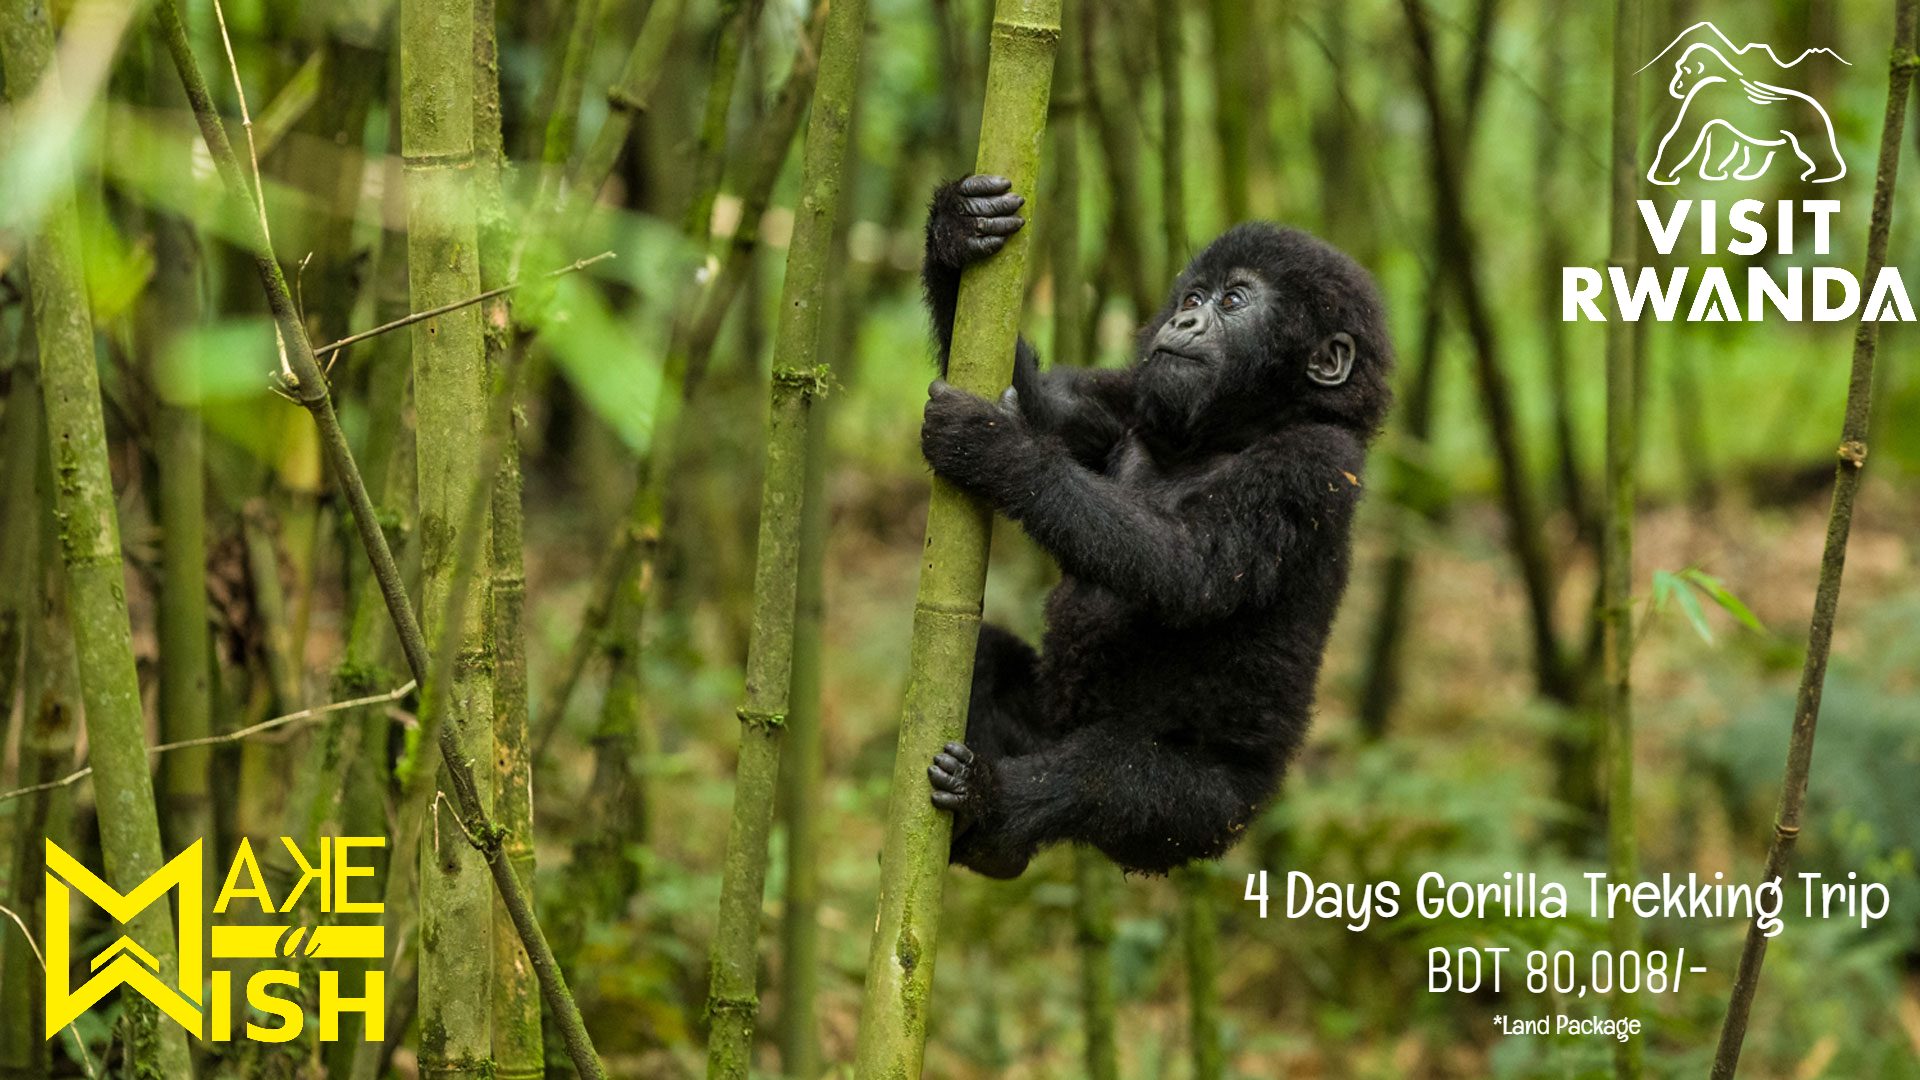 Visit RWANDA Gorilla Trekking Trip for 4 Days